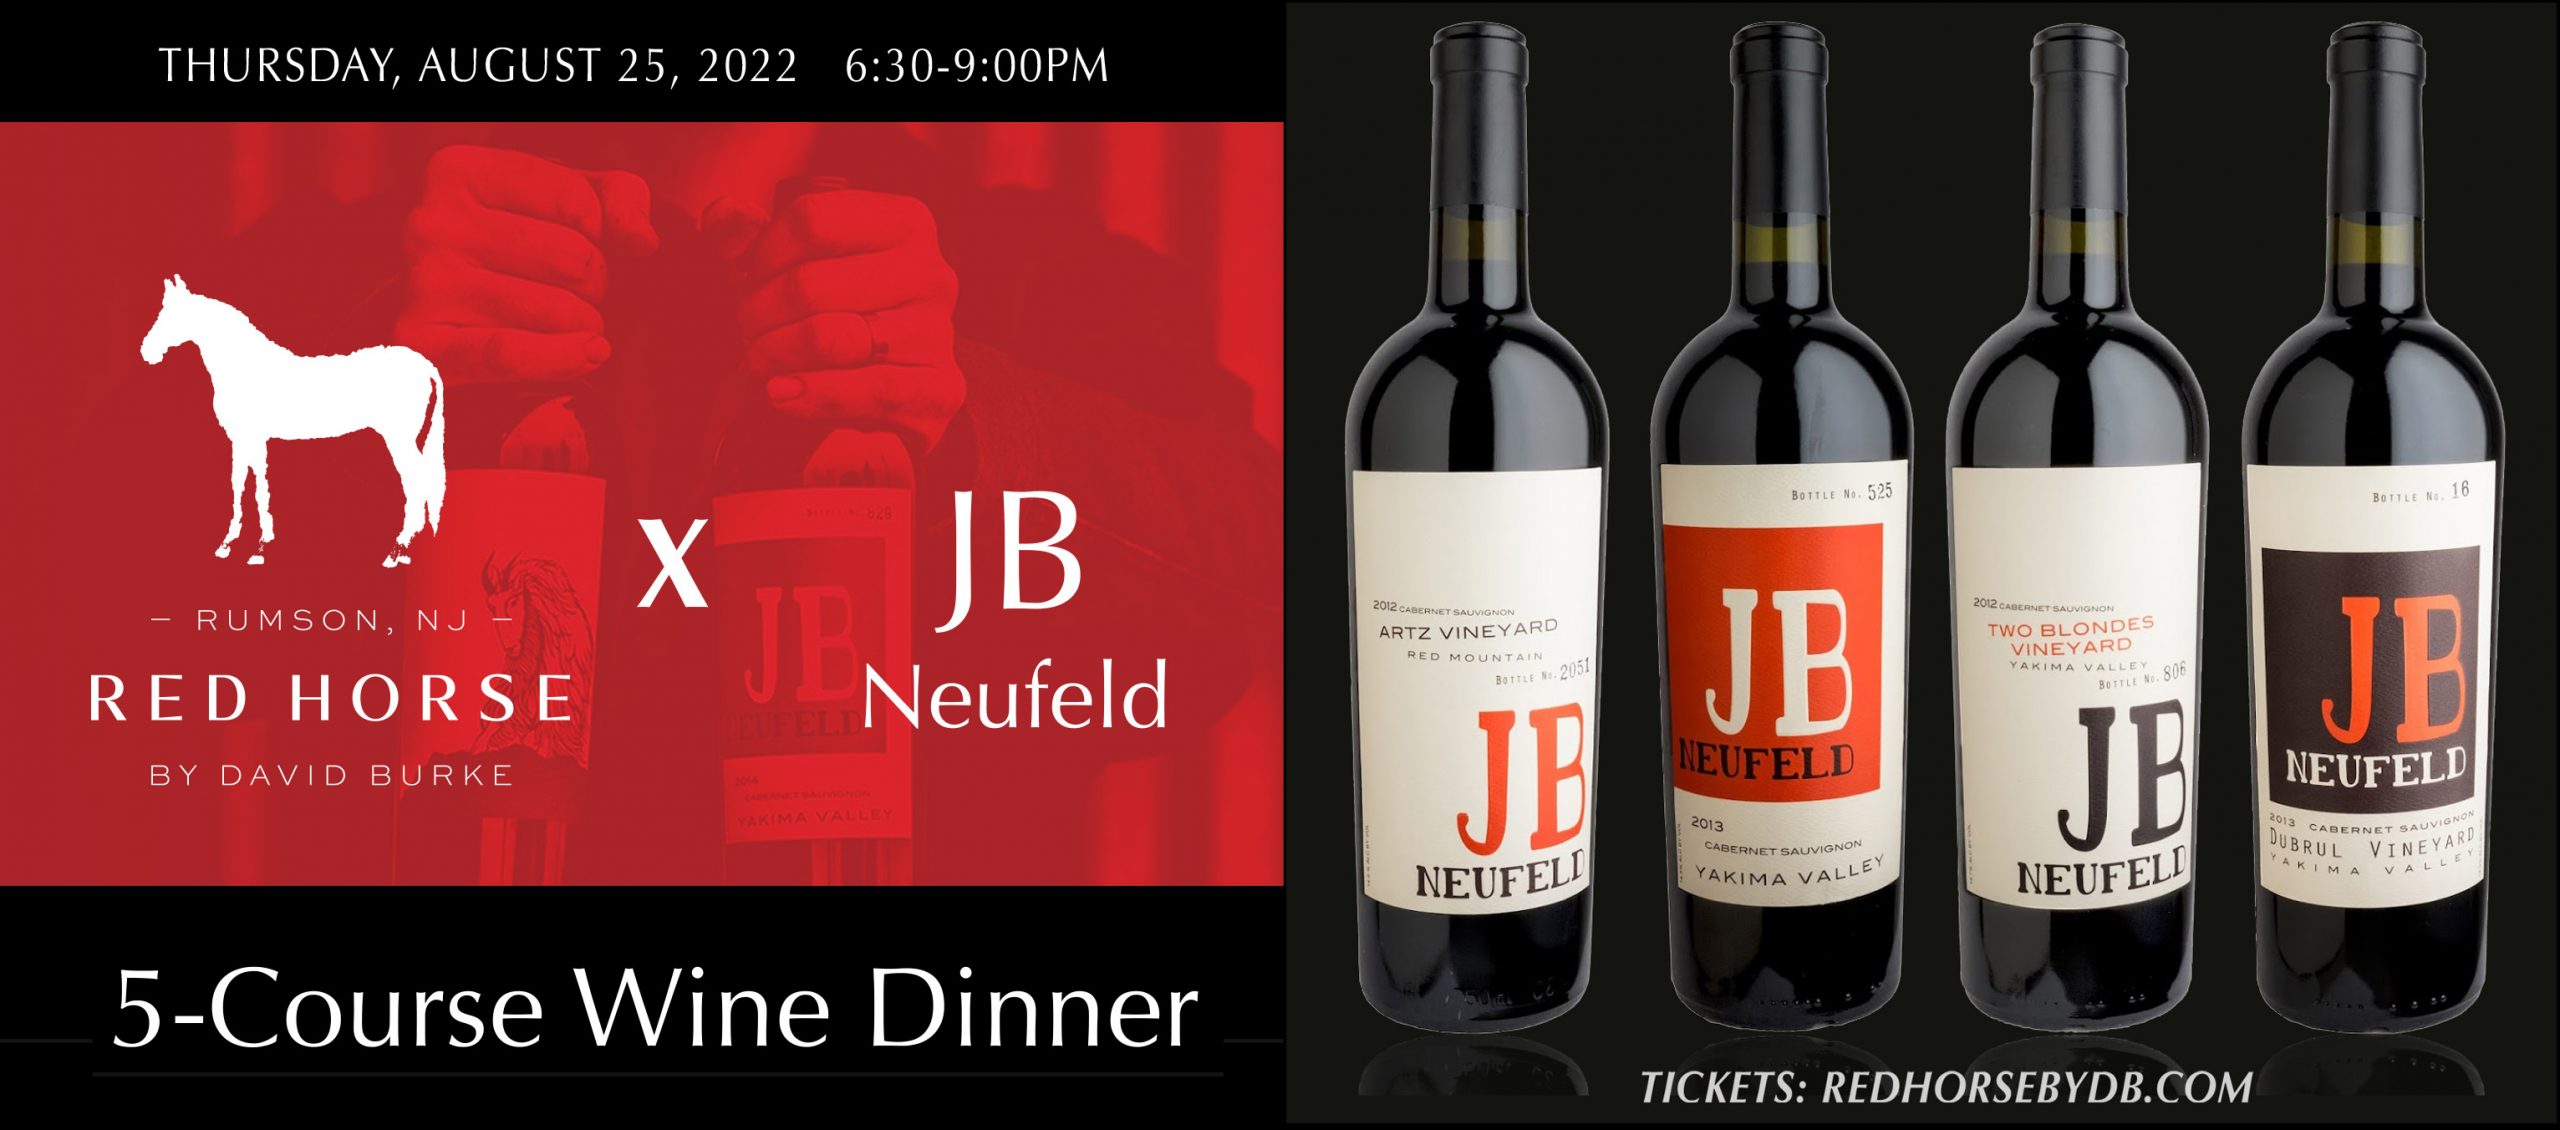 JN Neufeld X DAVID BURKE Tavern 5-Course Wine Dinner